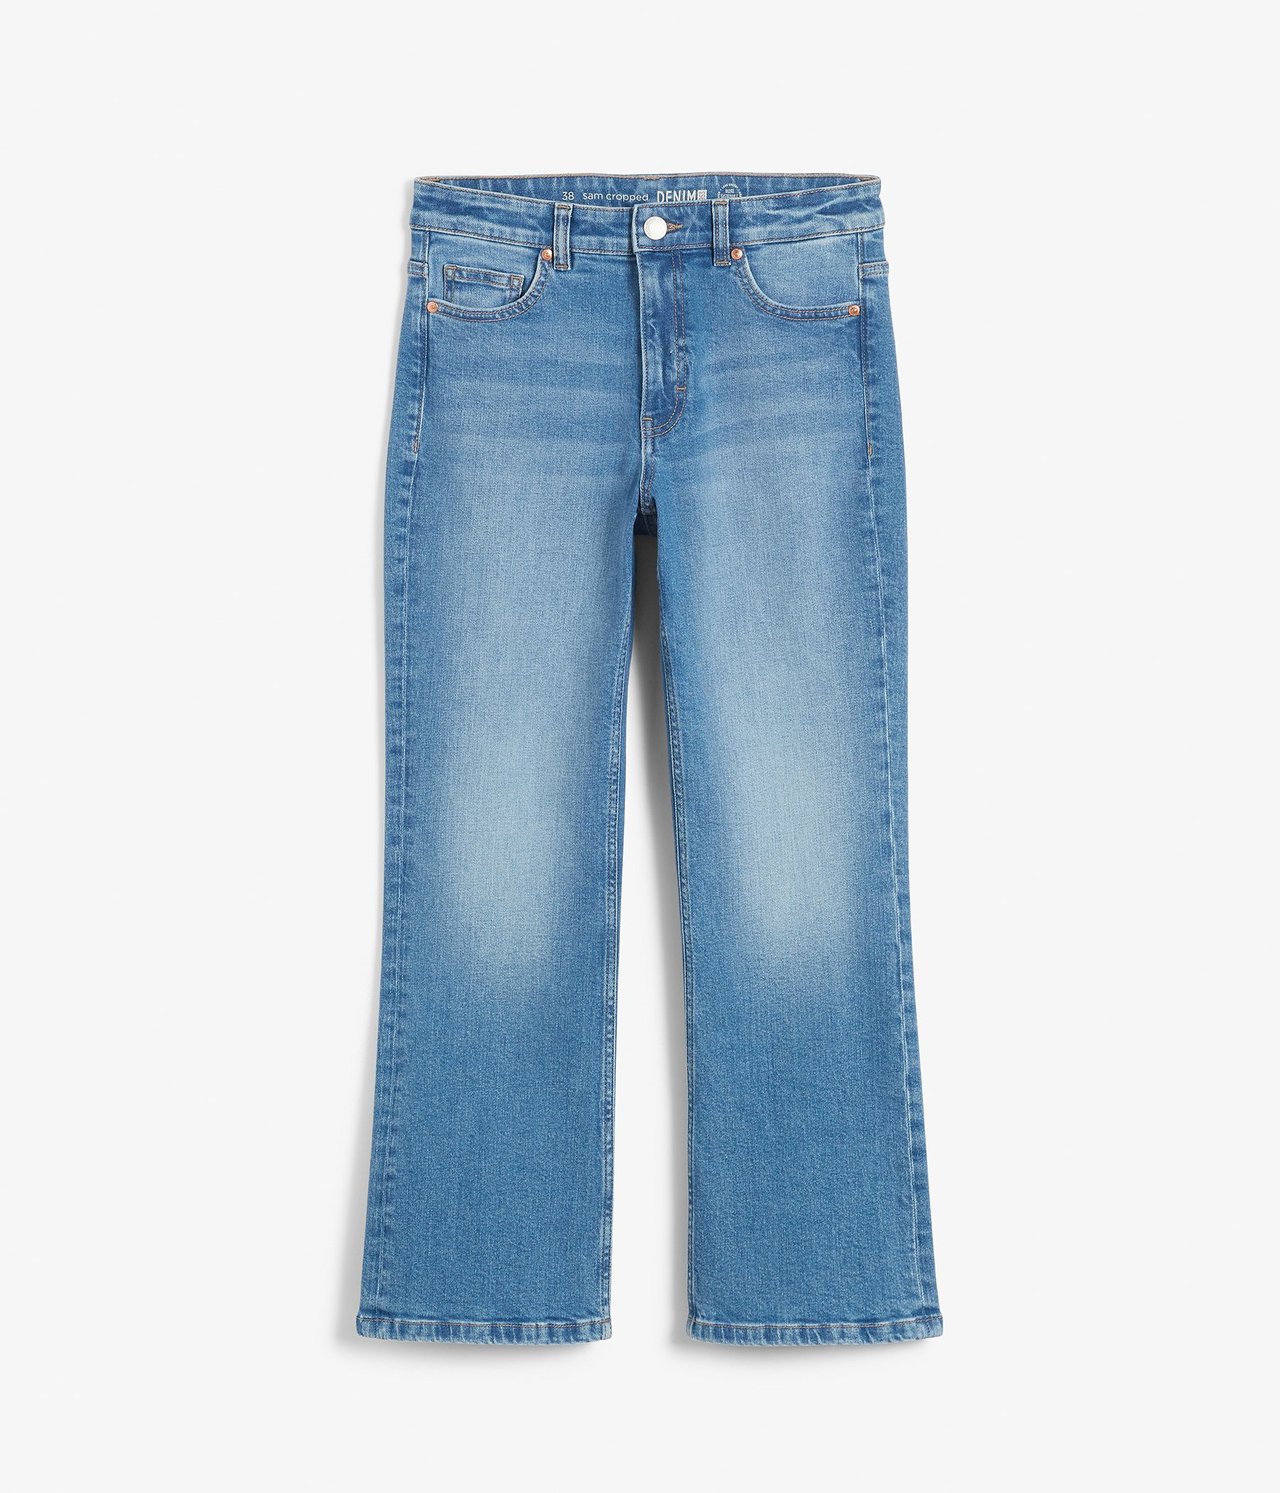 Cropped flare jeans regular waist